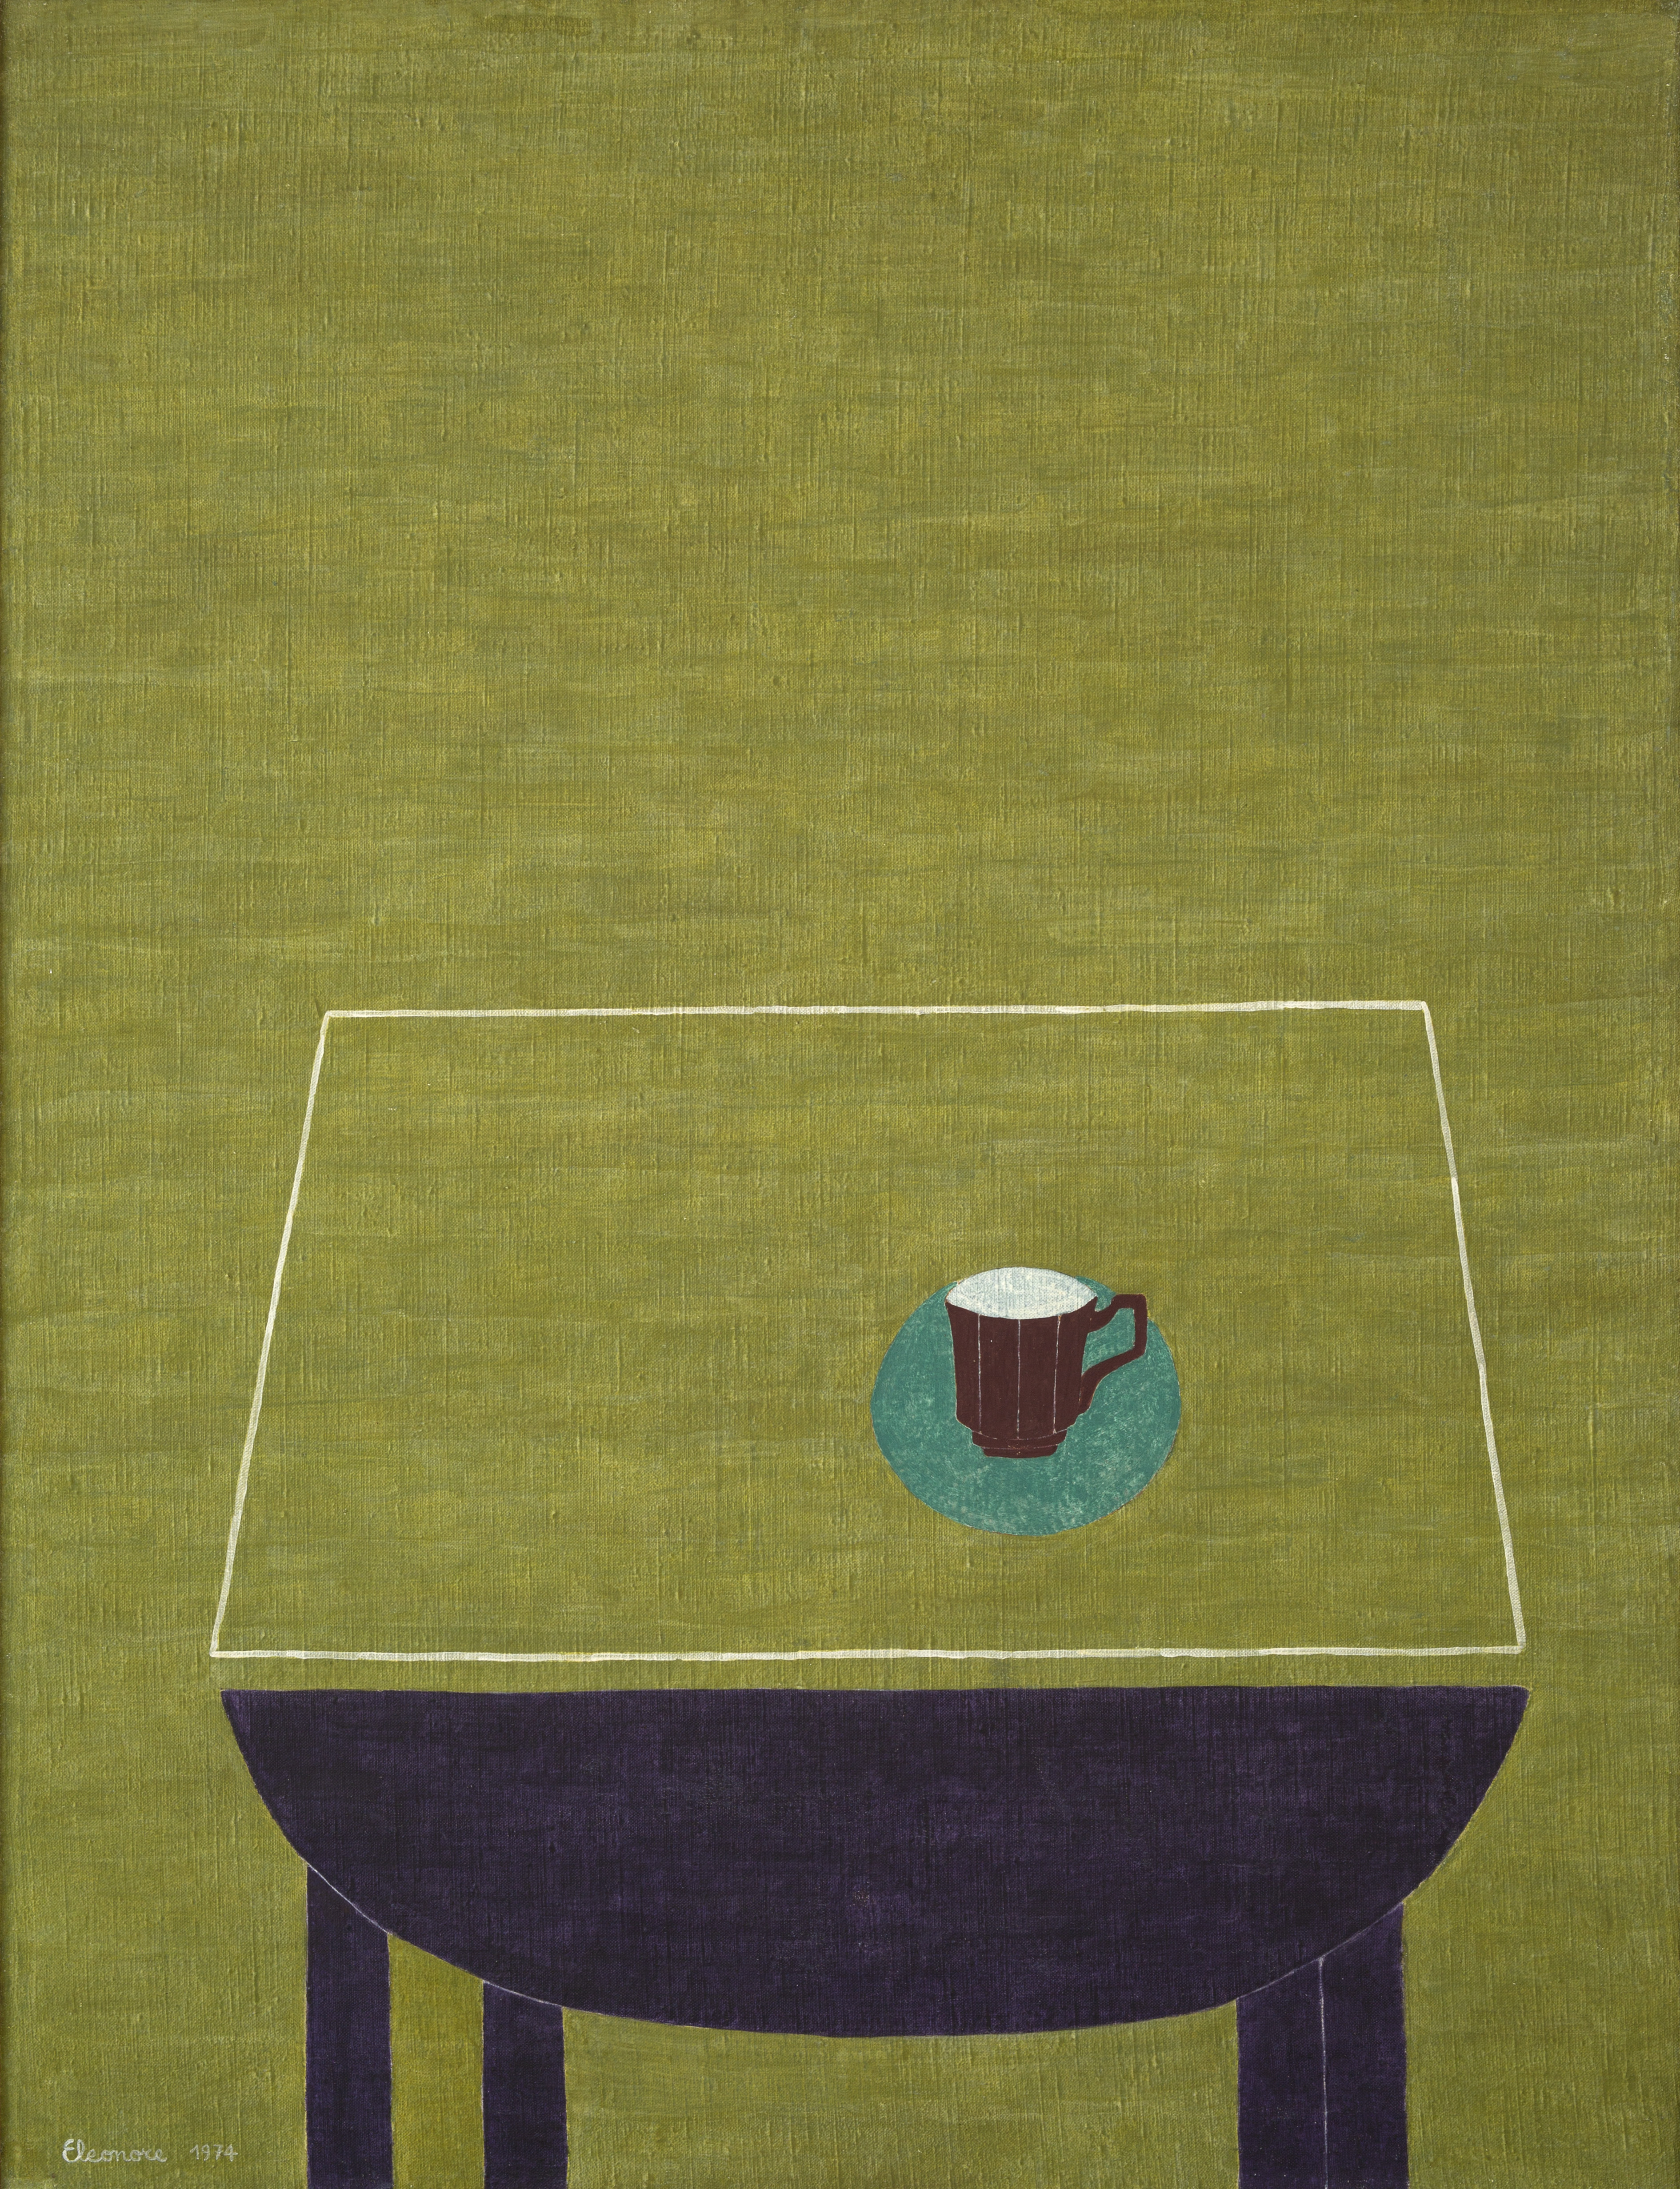 Eleonore Koch, Sem título [Untitled], 1974, MASP collection, gift Neyde Ugolini de Moraes, 2021